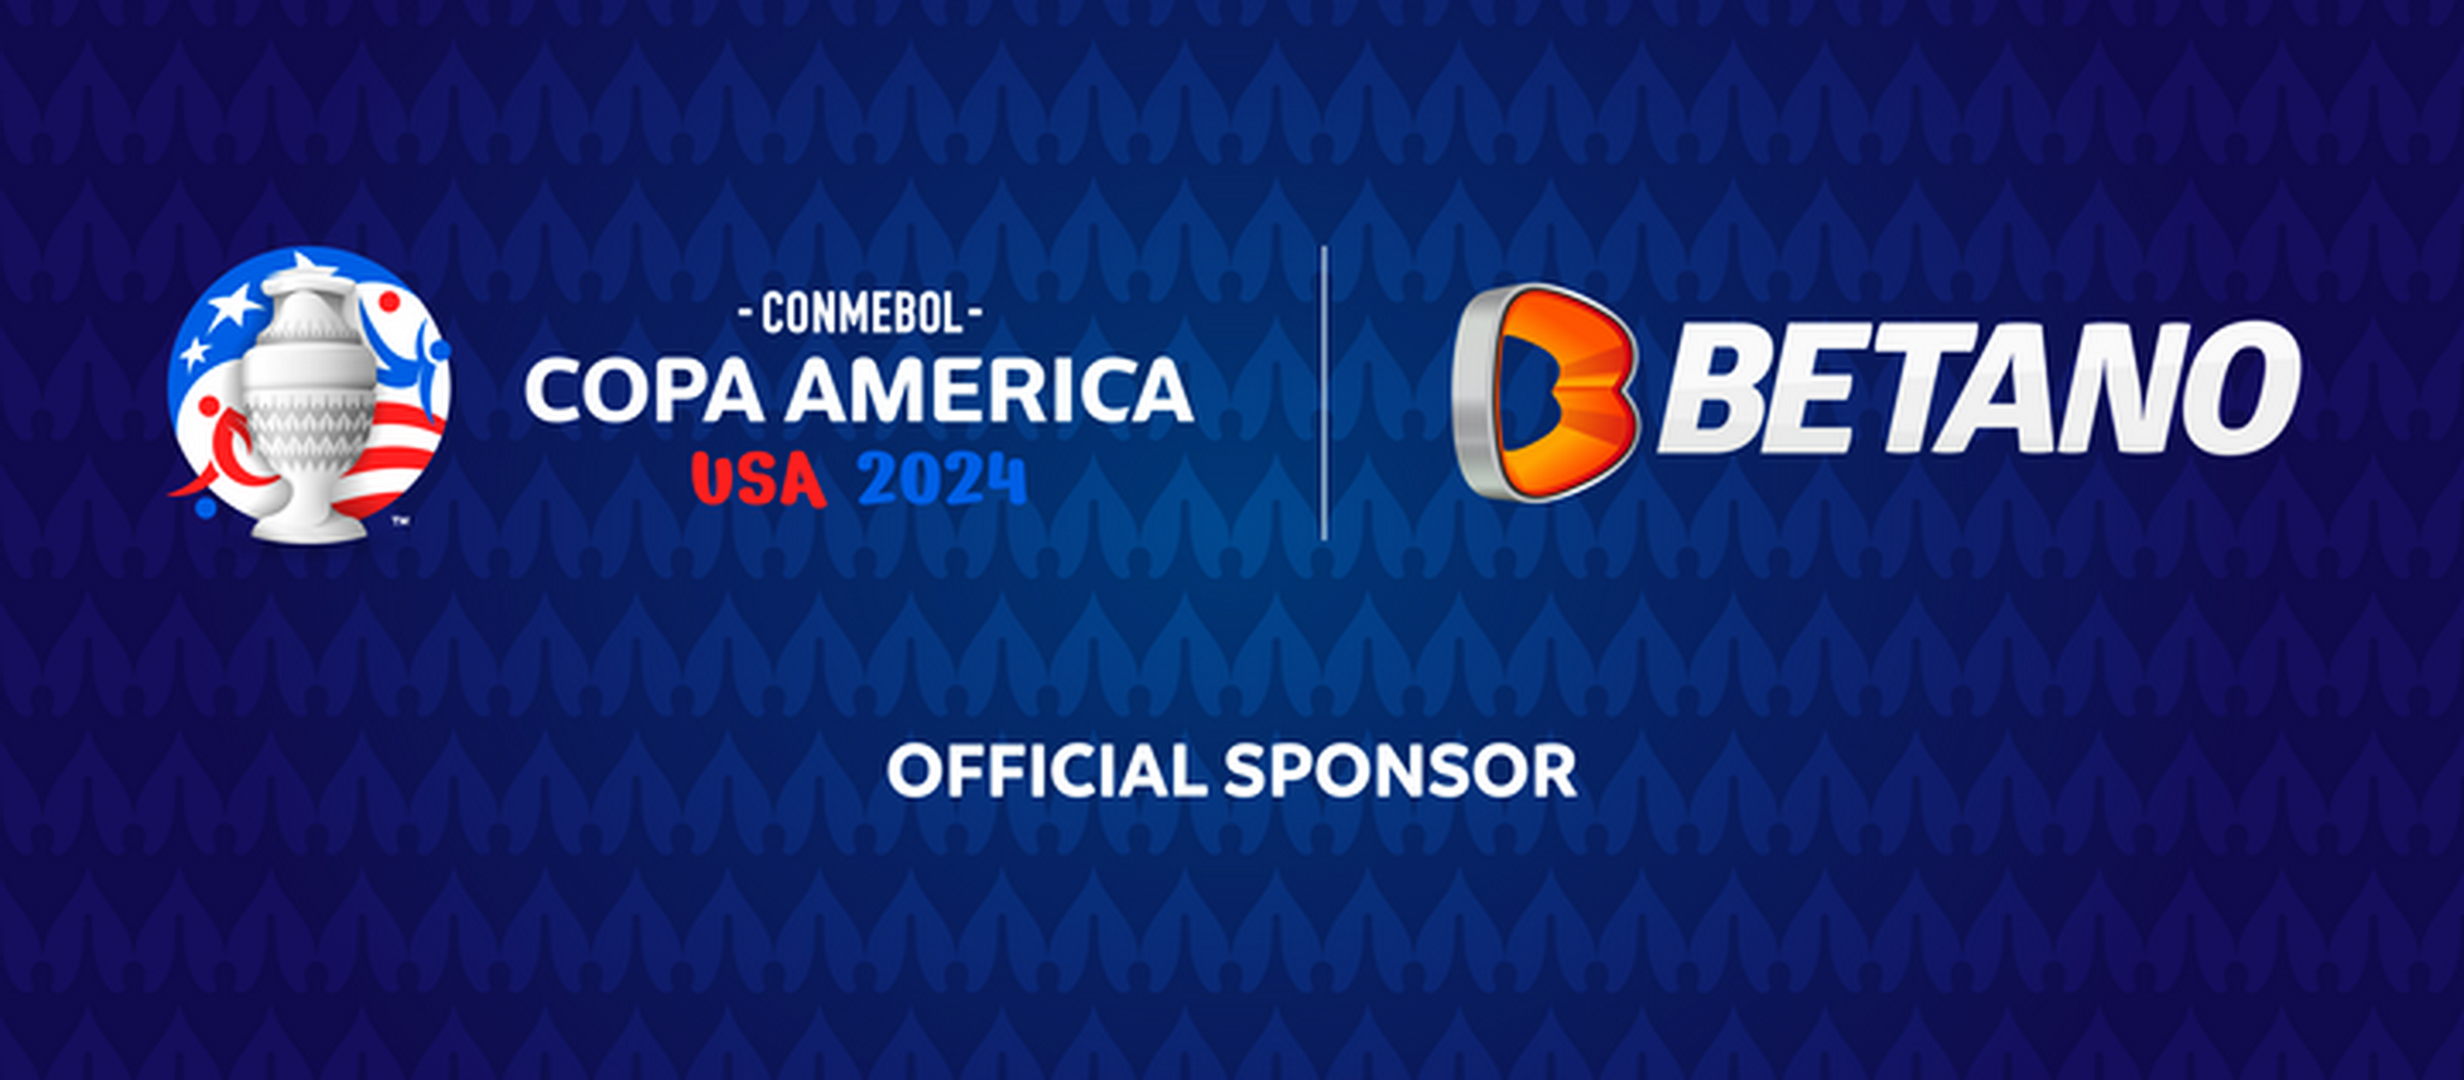 Kaizen Gaming anunță Betano drept sponsor oficial al Copa America 2024